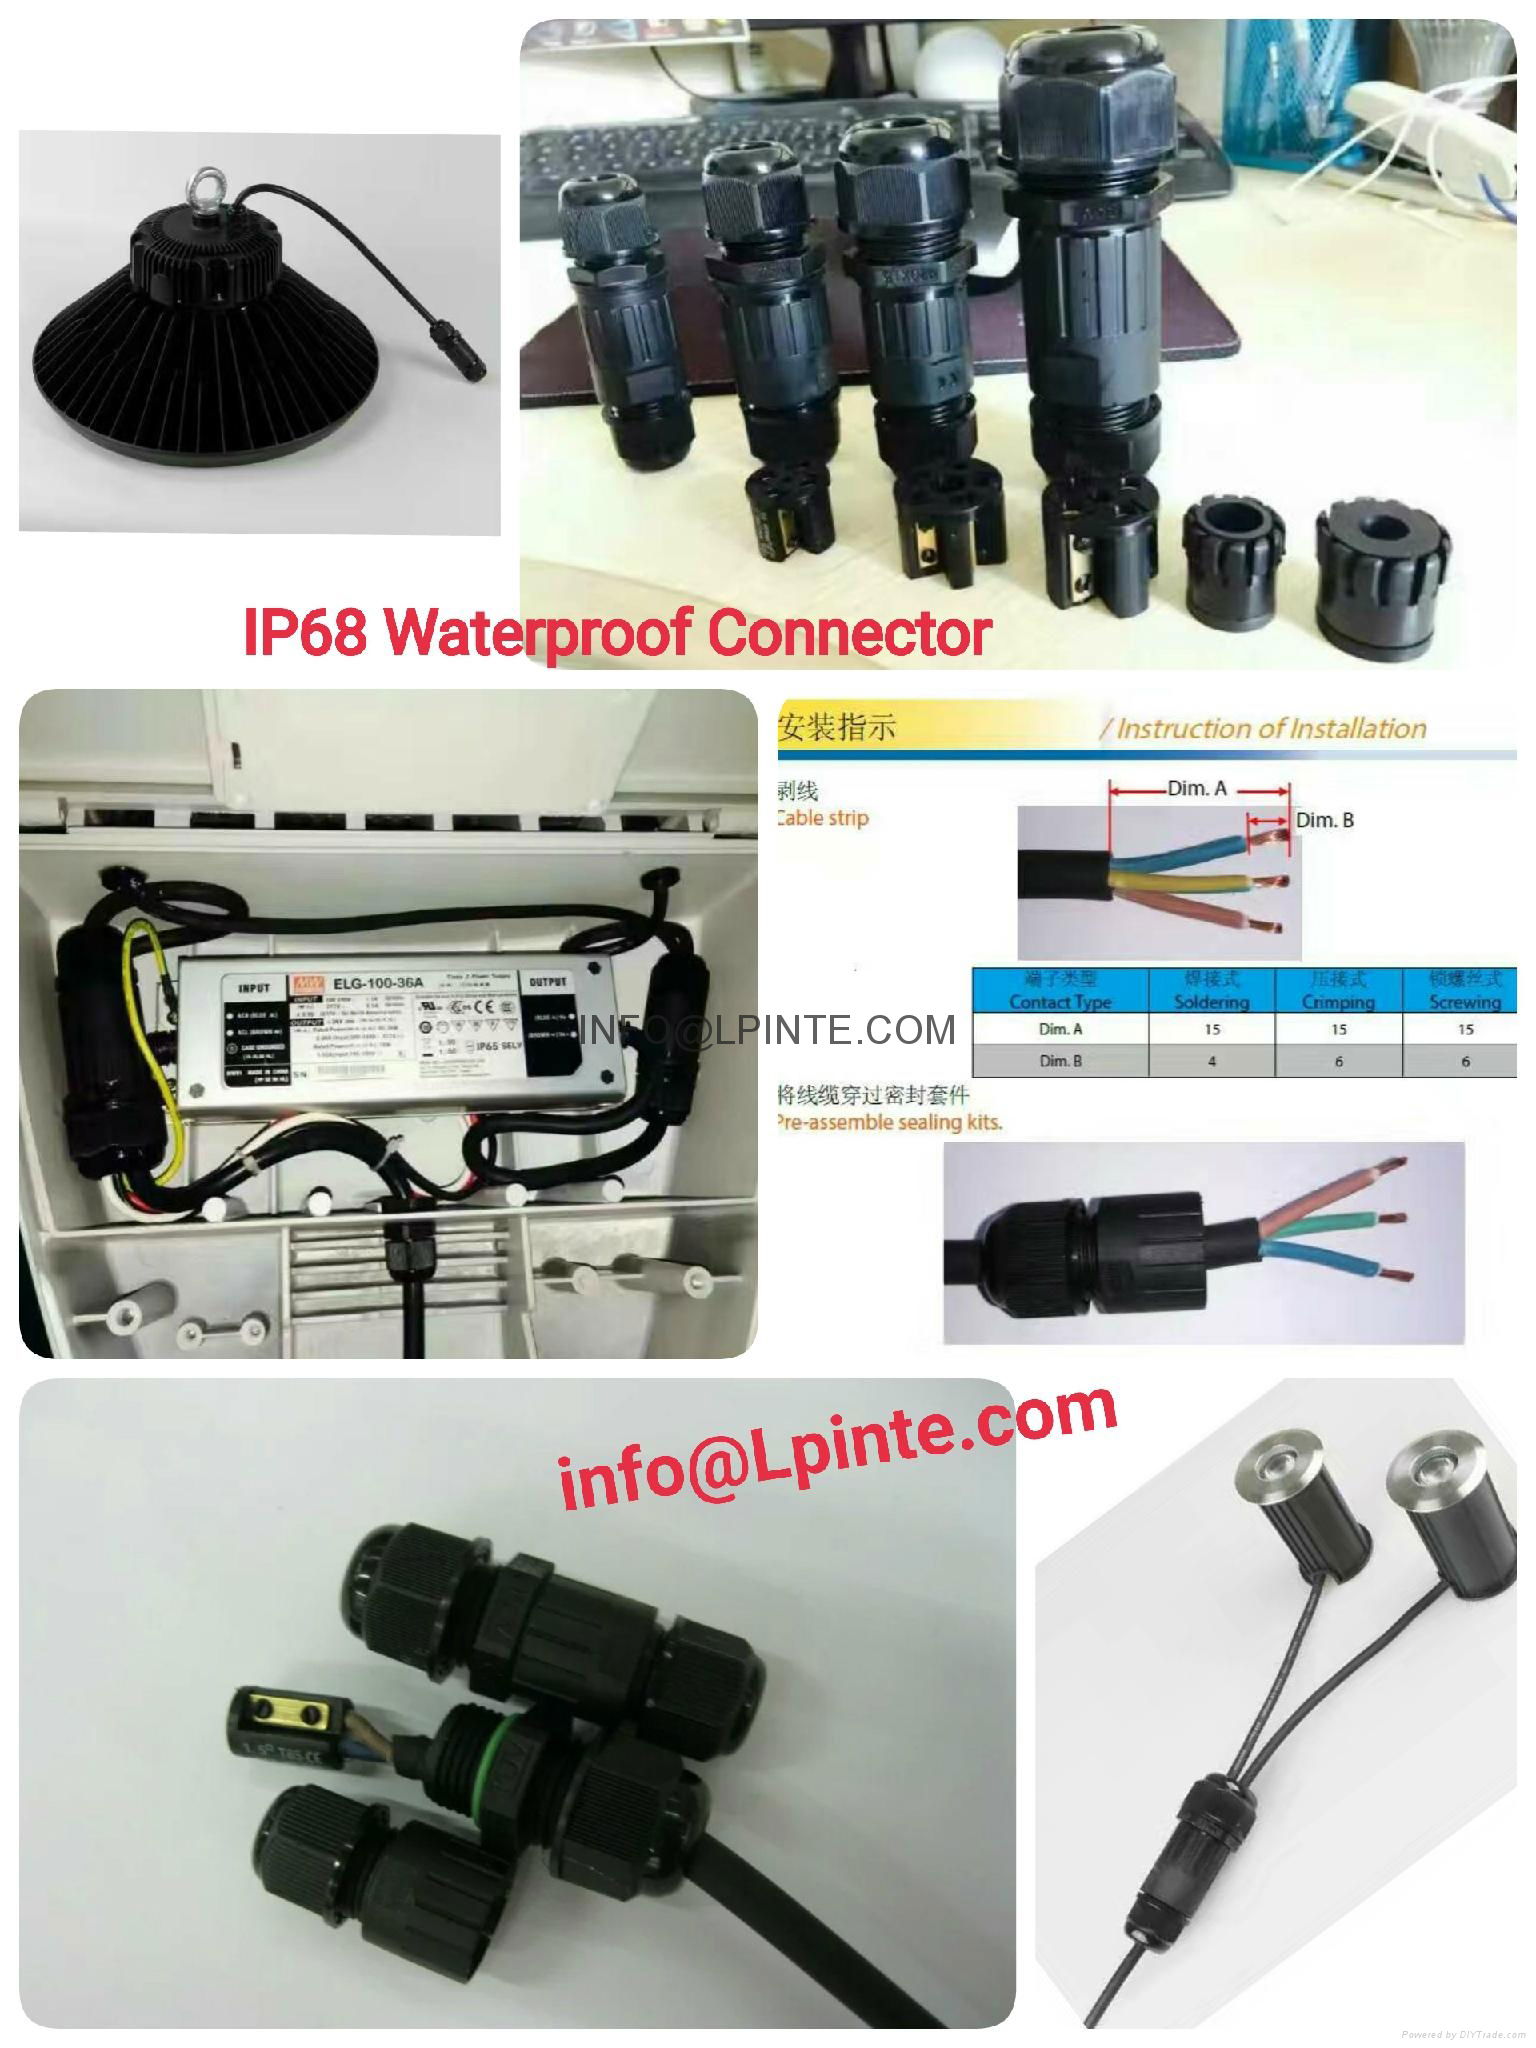 IP68 connector